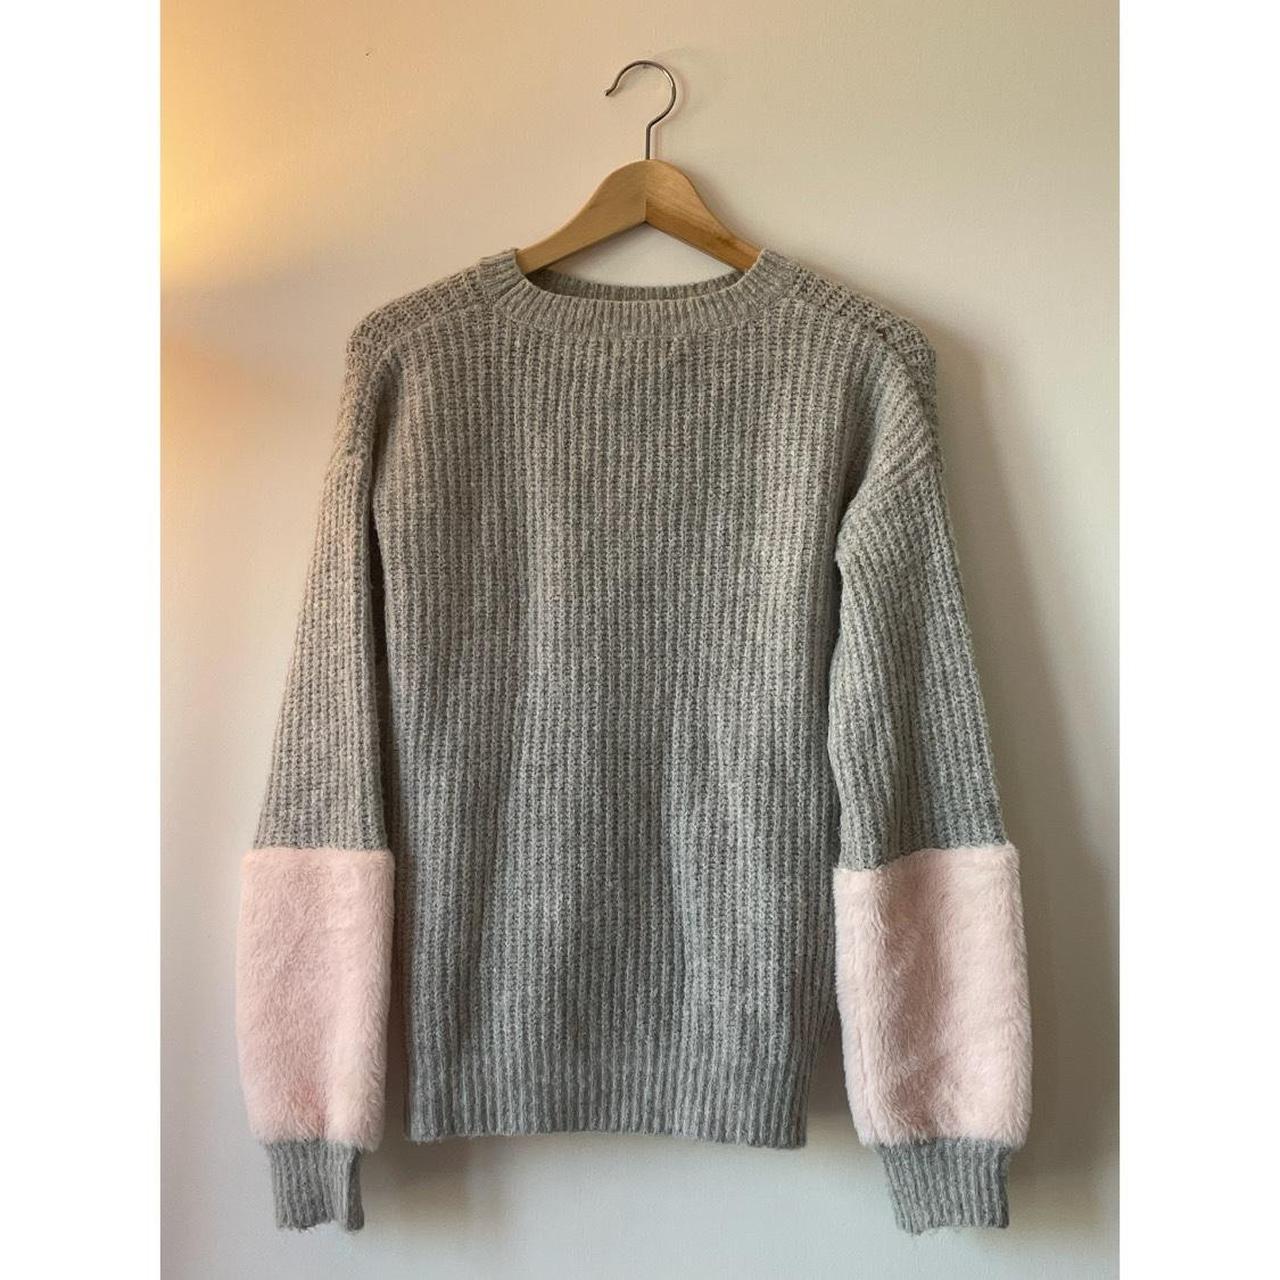 Primark Grey Knitted Jumper with Pink Fluffy... - Depop